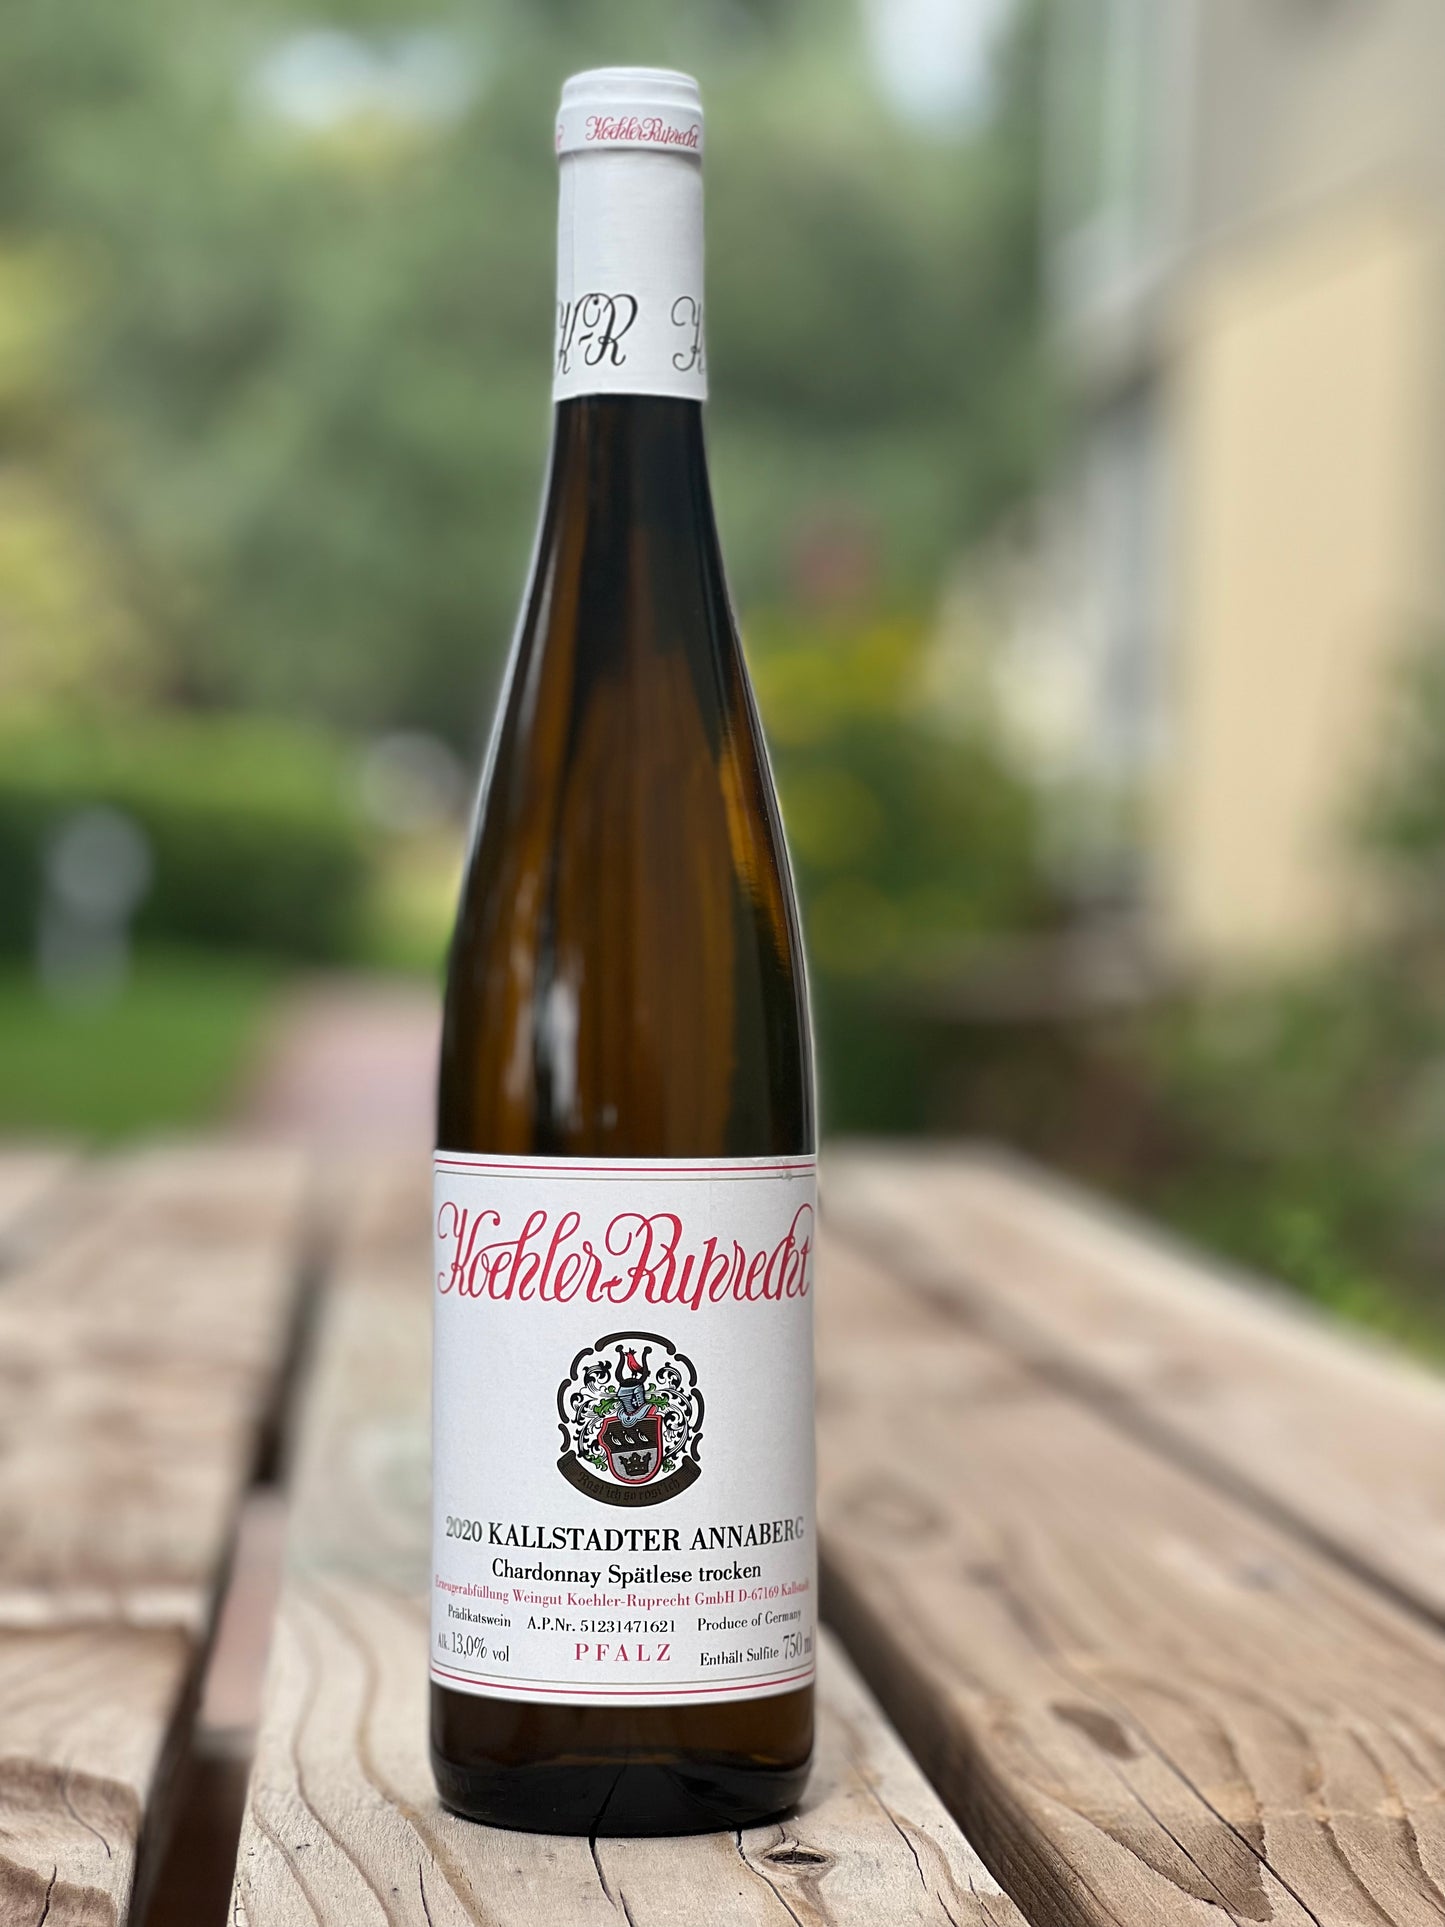 Koehler-Ruprecht Chardonnay Spatlese Trocken Kallstadter Annaberg Pfalz, Germany 2020